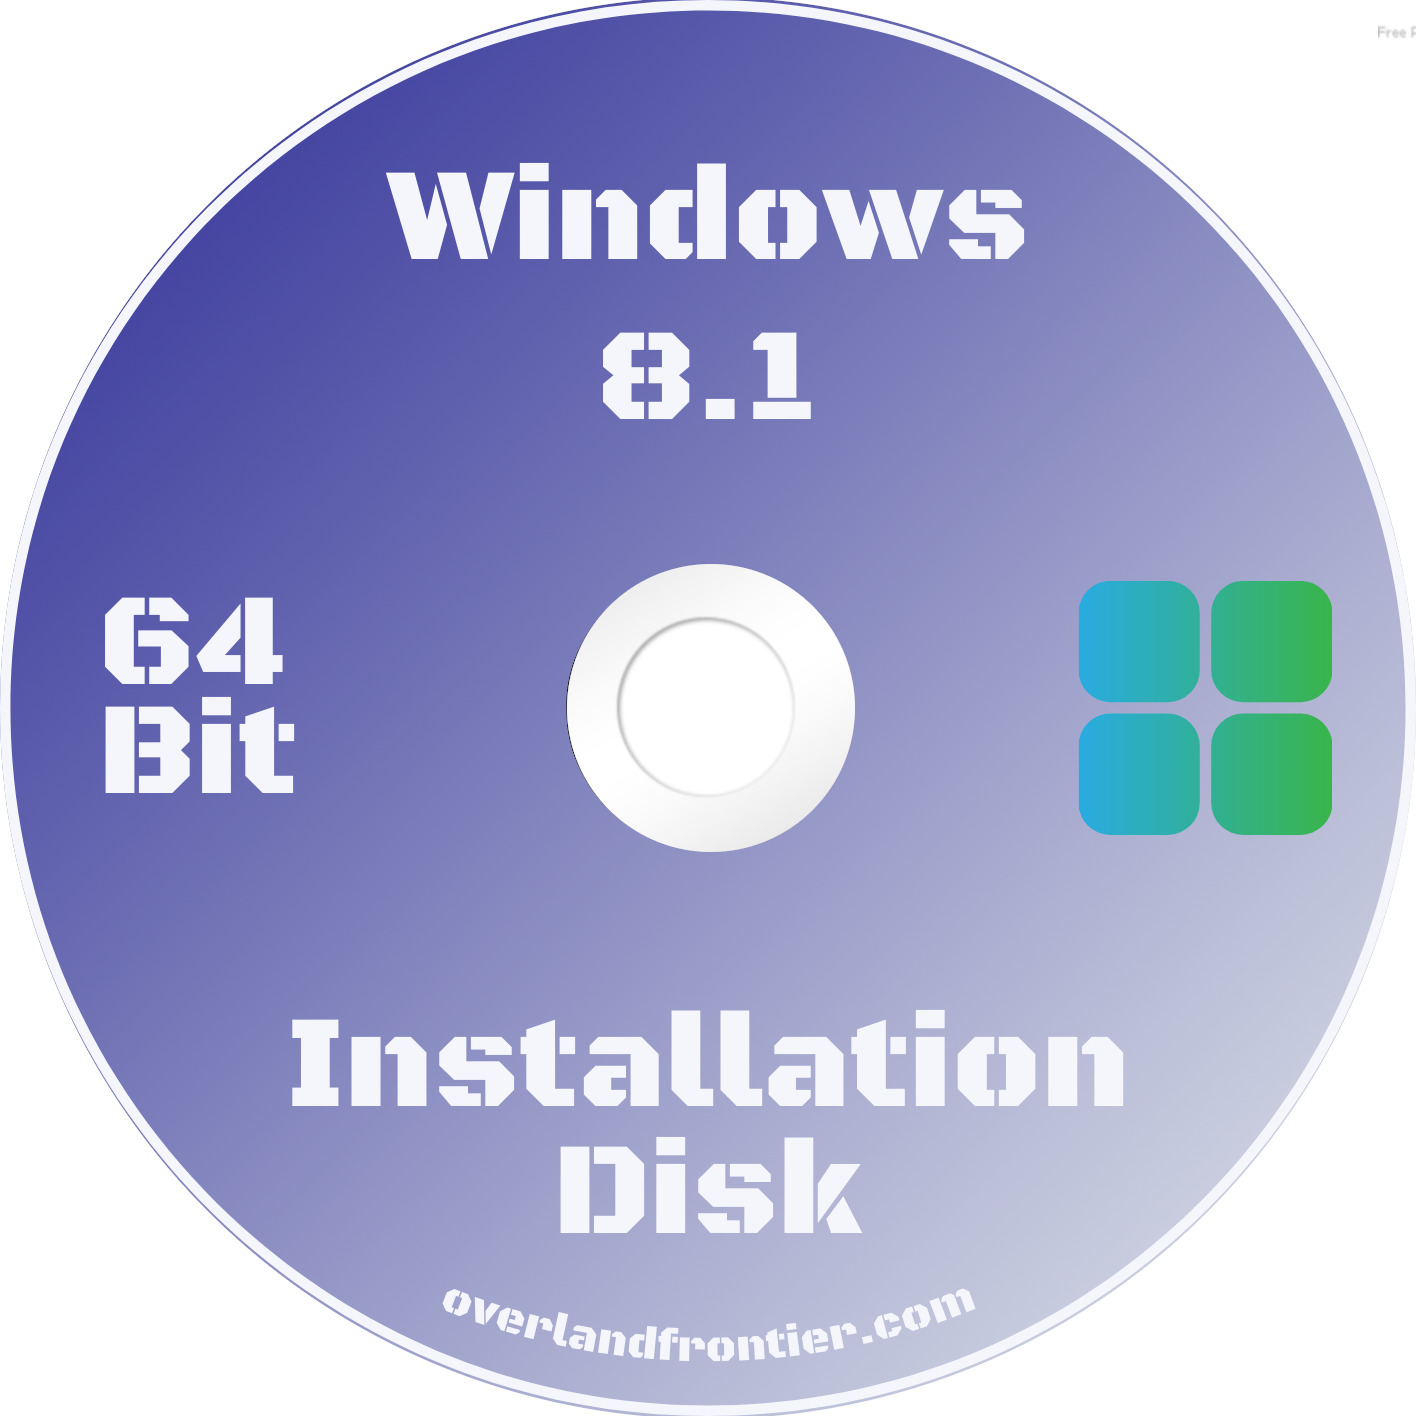 Microsoft Windows 8.1 64-Bit Installation Disk - DVD